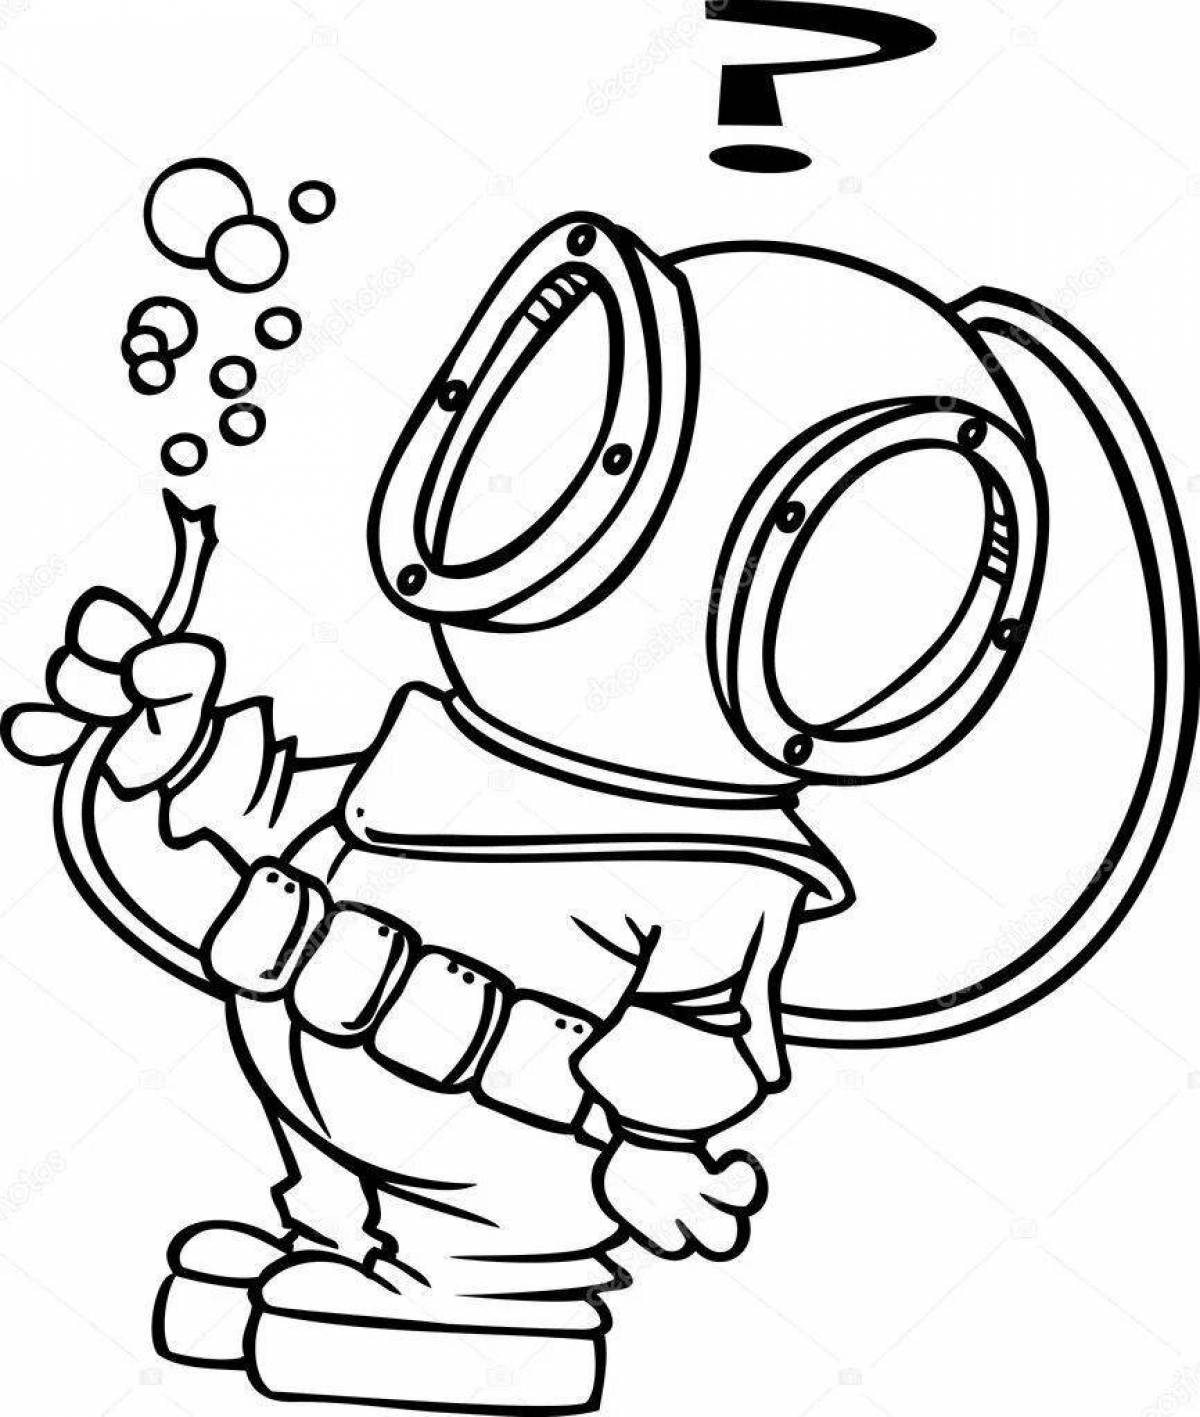 Coloring page energetic scuba diver